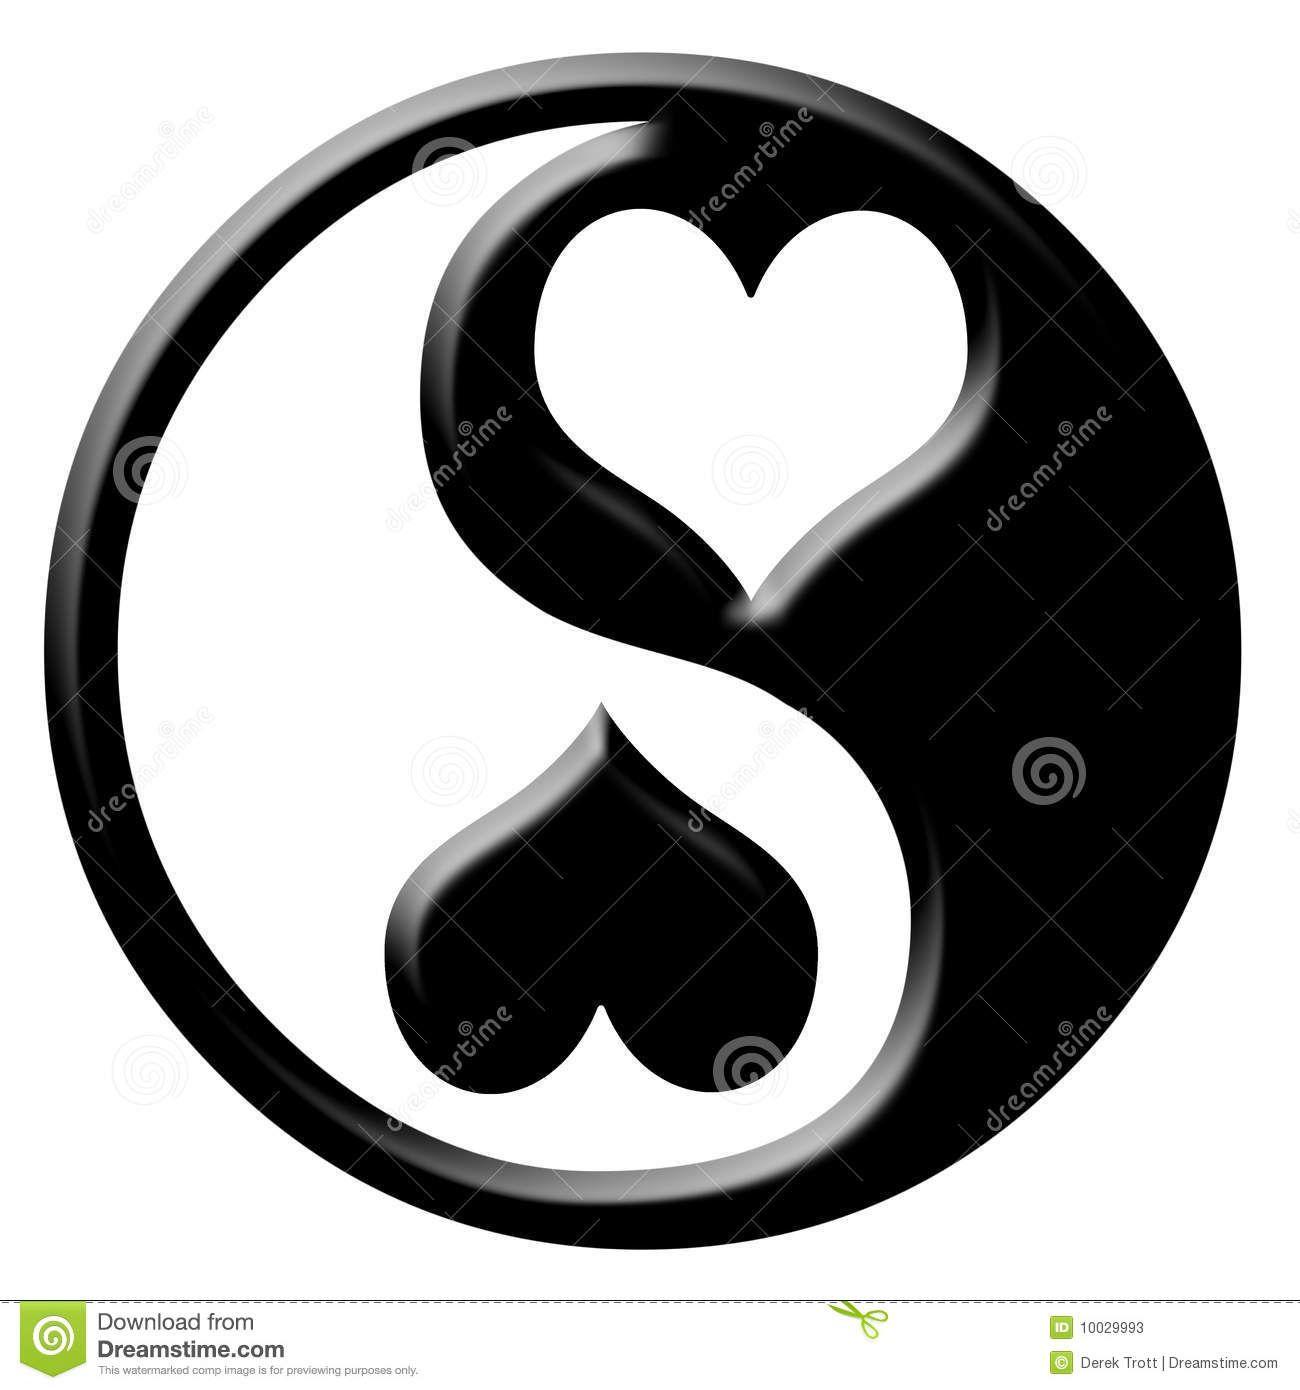 Yin Yang Black and White Box Logo - Black Love Heart, Yin Yang From Over 58 Million High